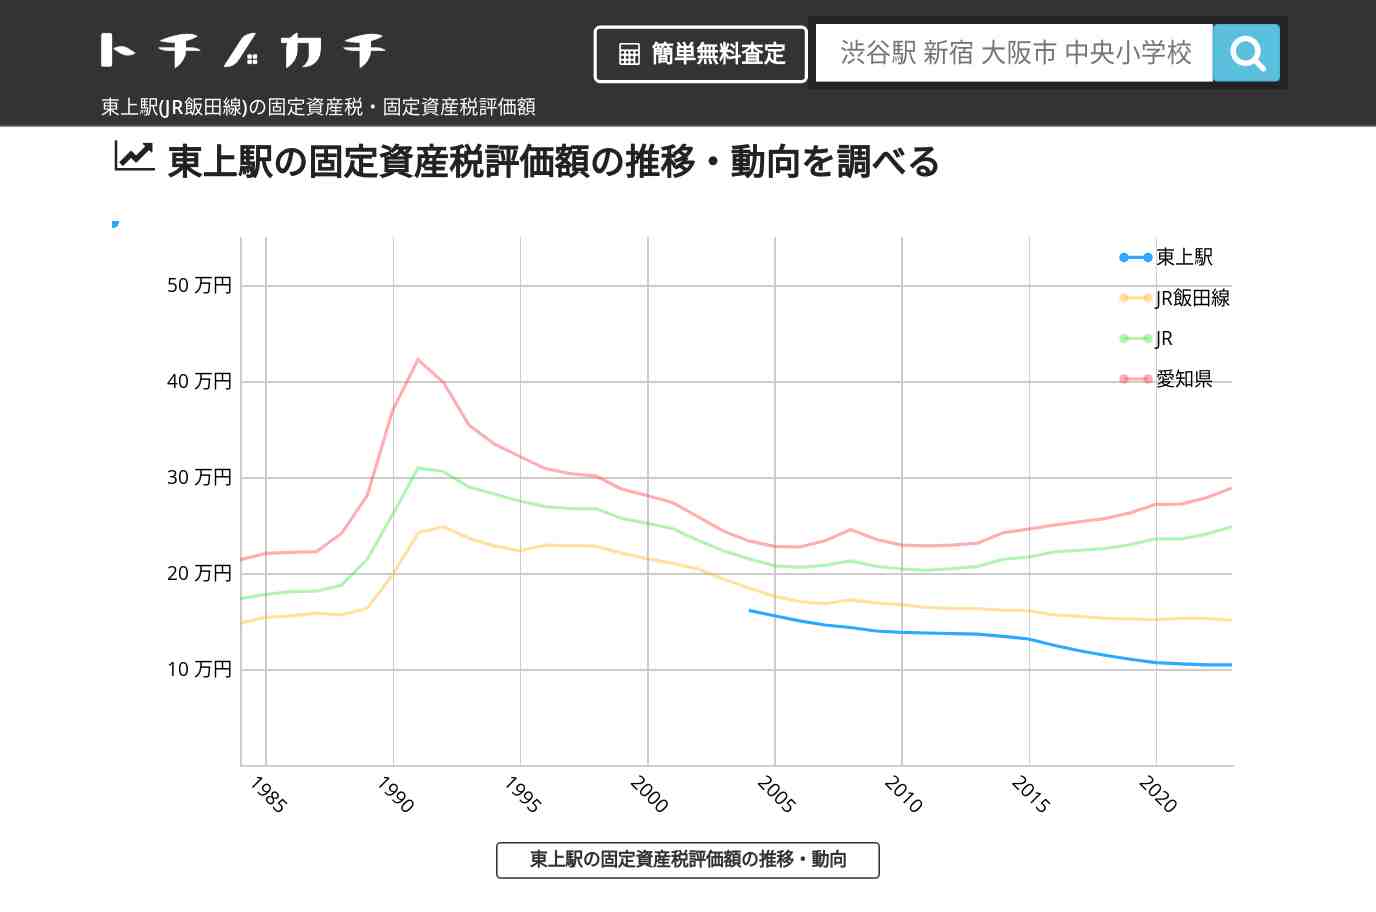 東上駅(JR飯田線)の固定資産税・固定資産税評価額 | トチノカチ